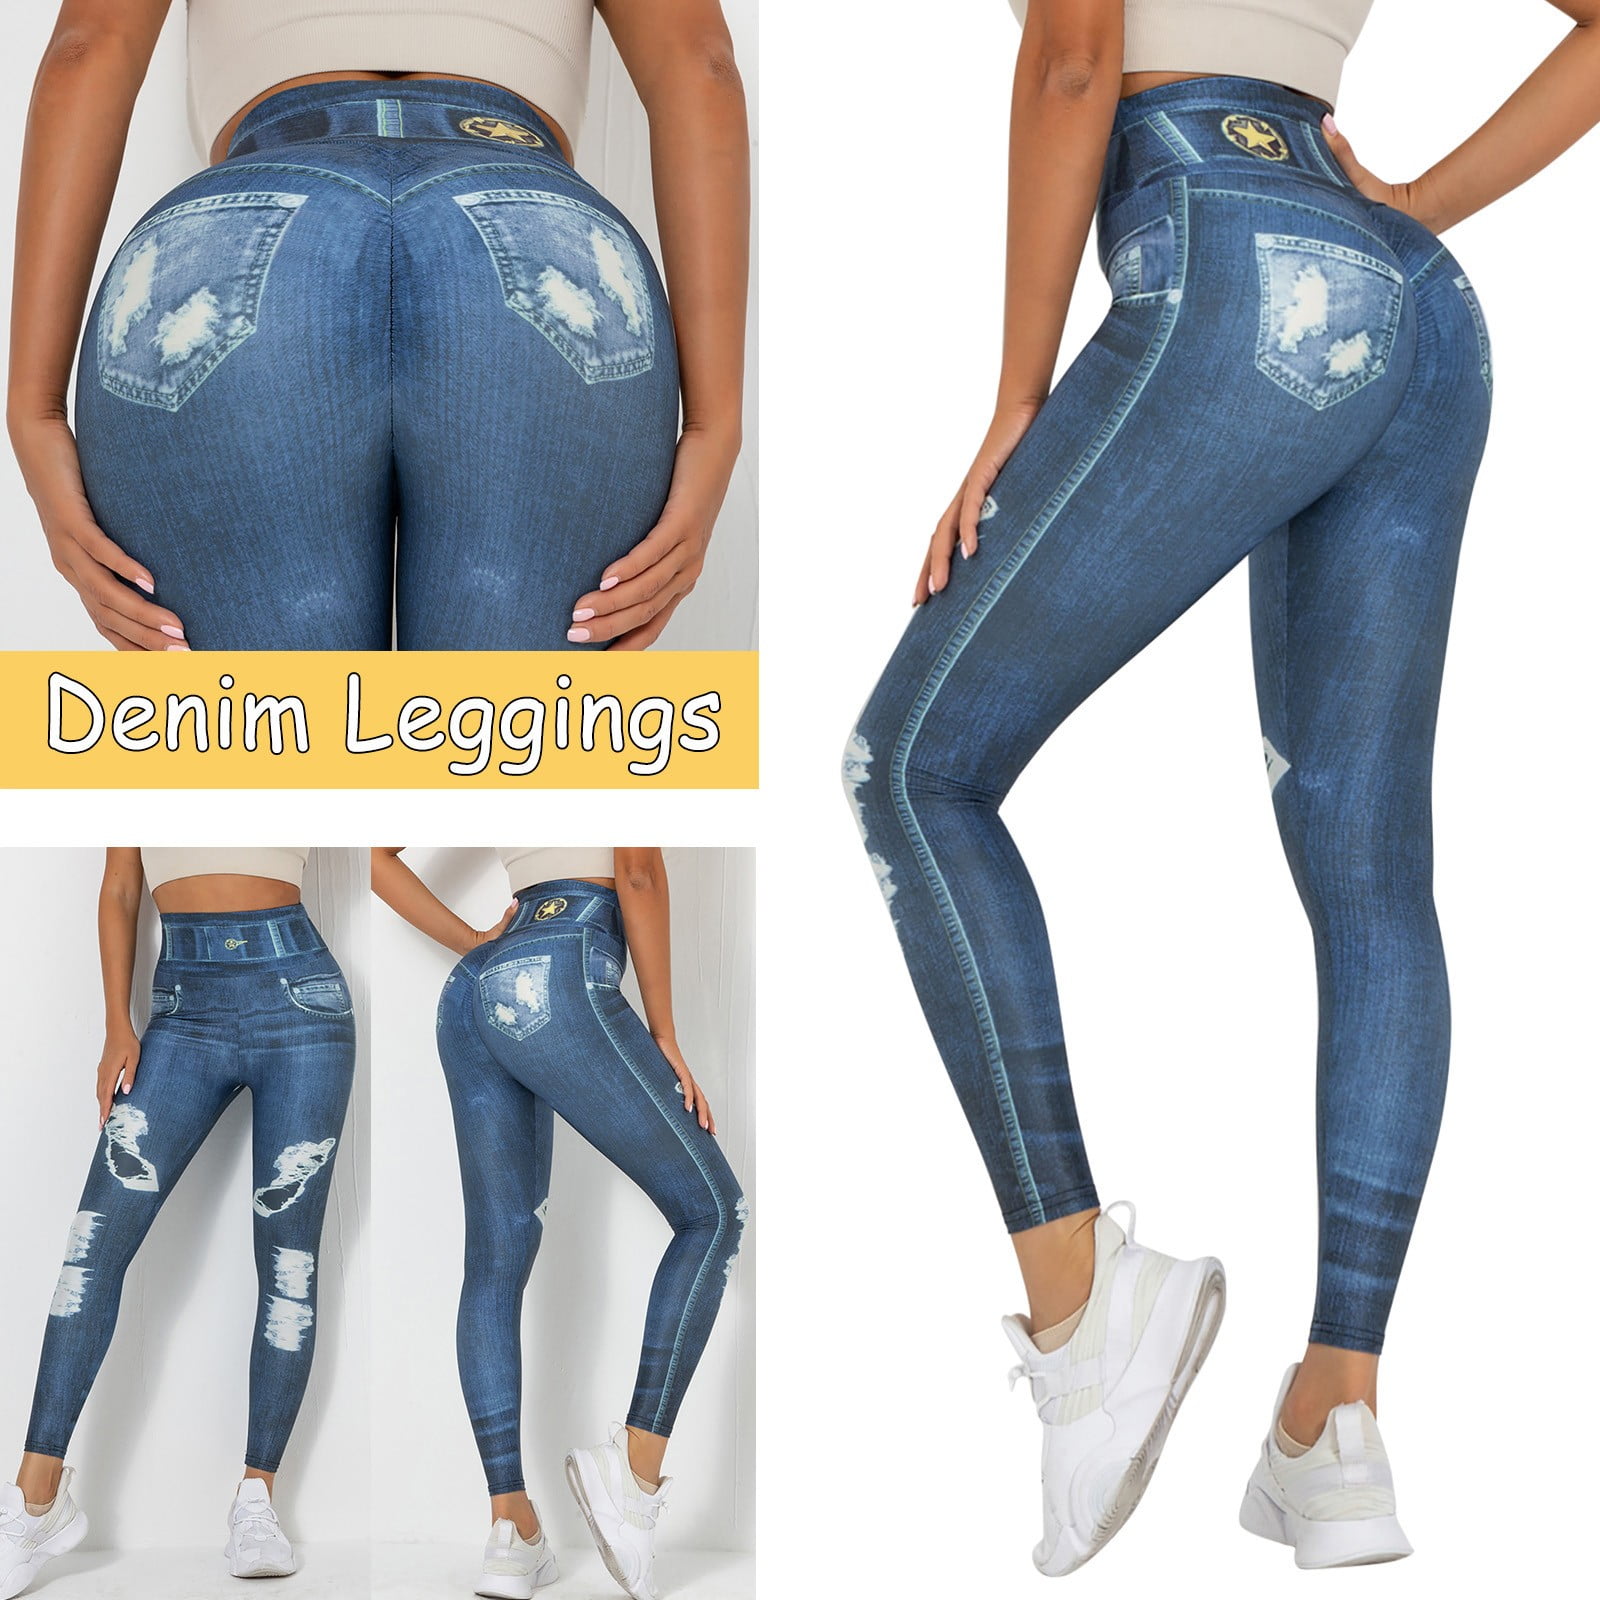 NEGJ Women's Print Jeans Look Like Leggings Stretchy Waist Slim Skinny Walmart.com